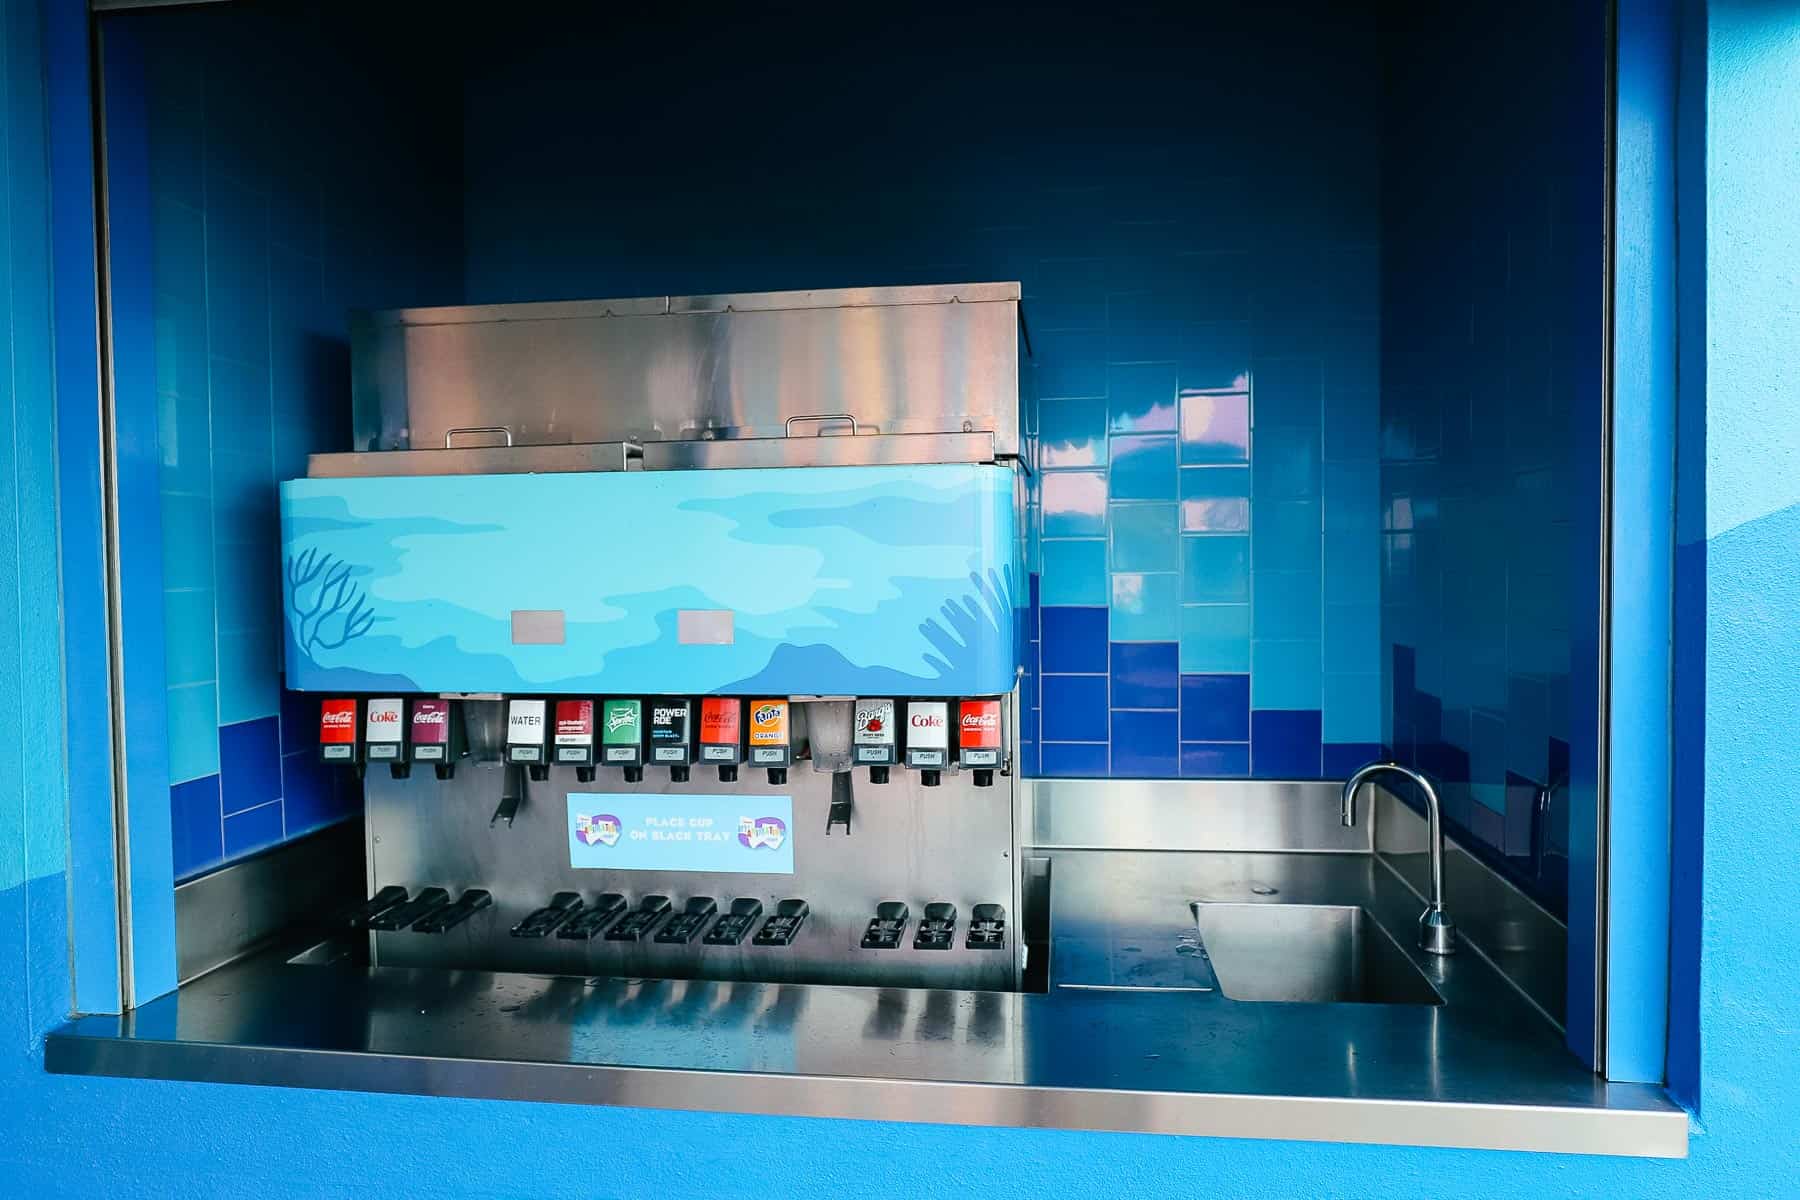 Rapid Fill Mug station near the pool at Disney's Art of Animation